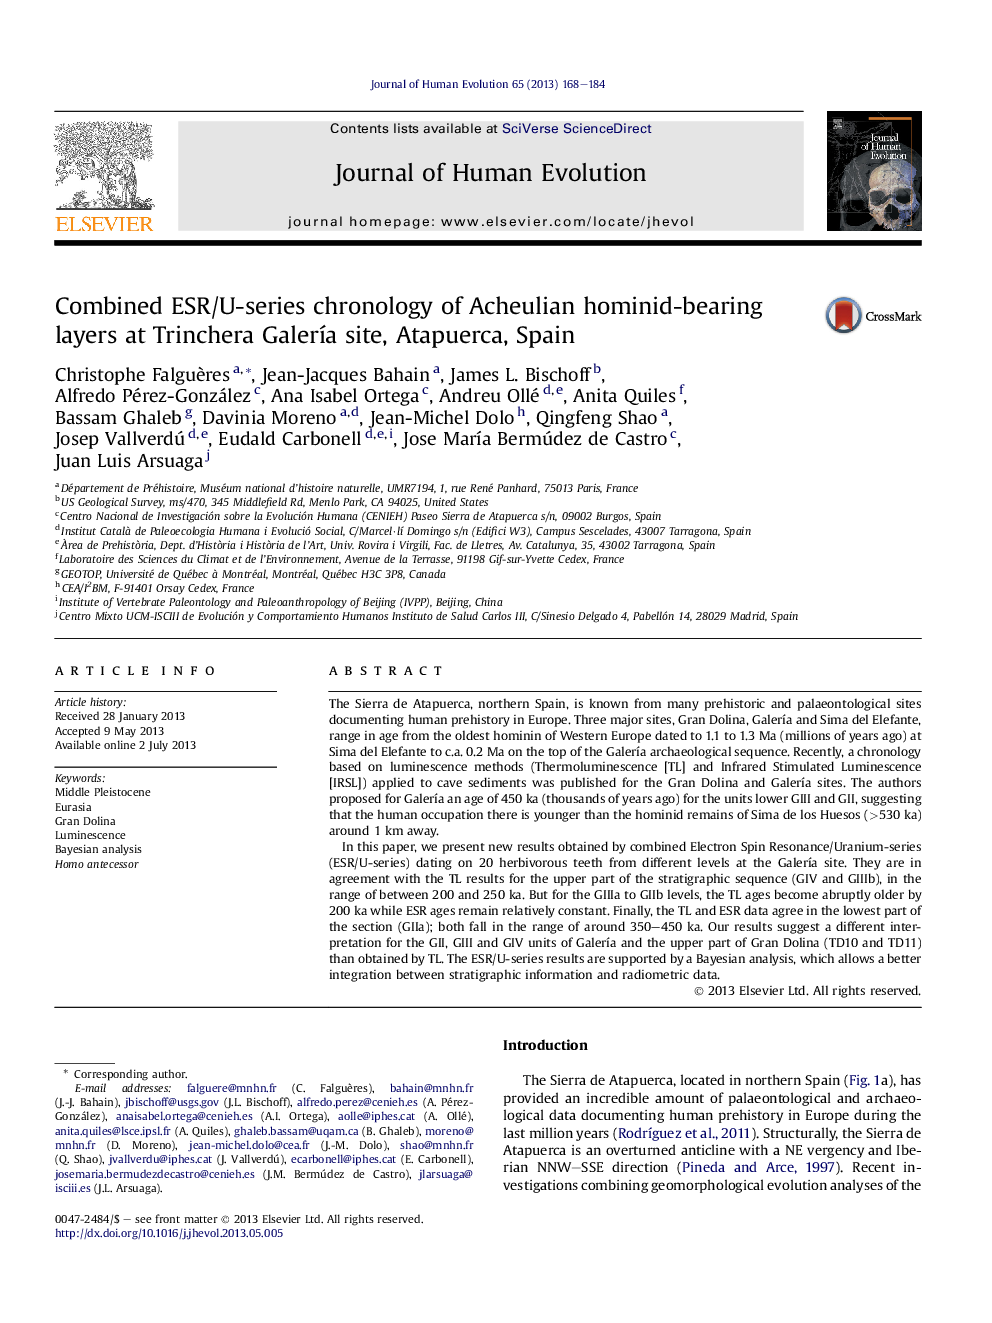 Combined ESR/U-series chronology of Acheulian hominid-bearing layers at Trinchera Galería site, Atapuerca, Spain